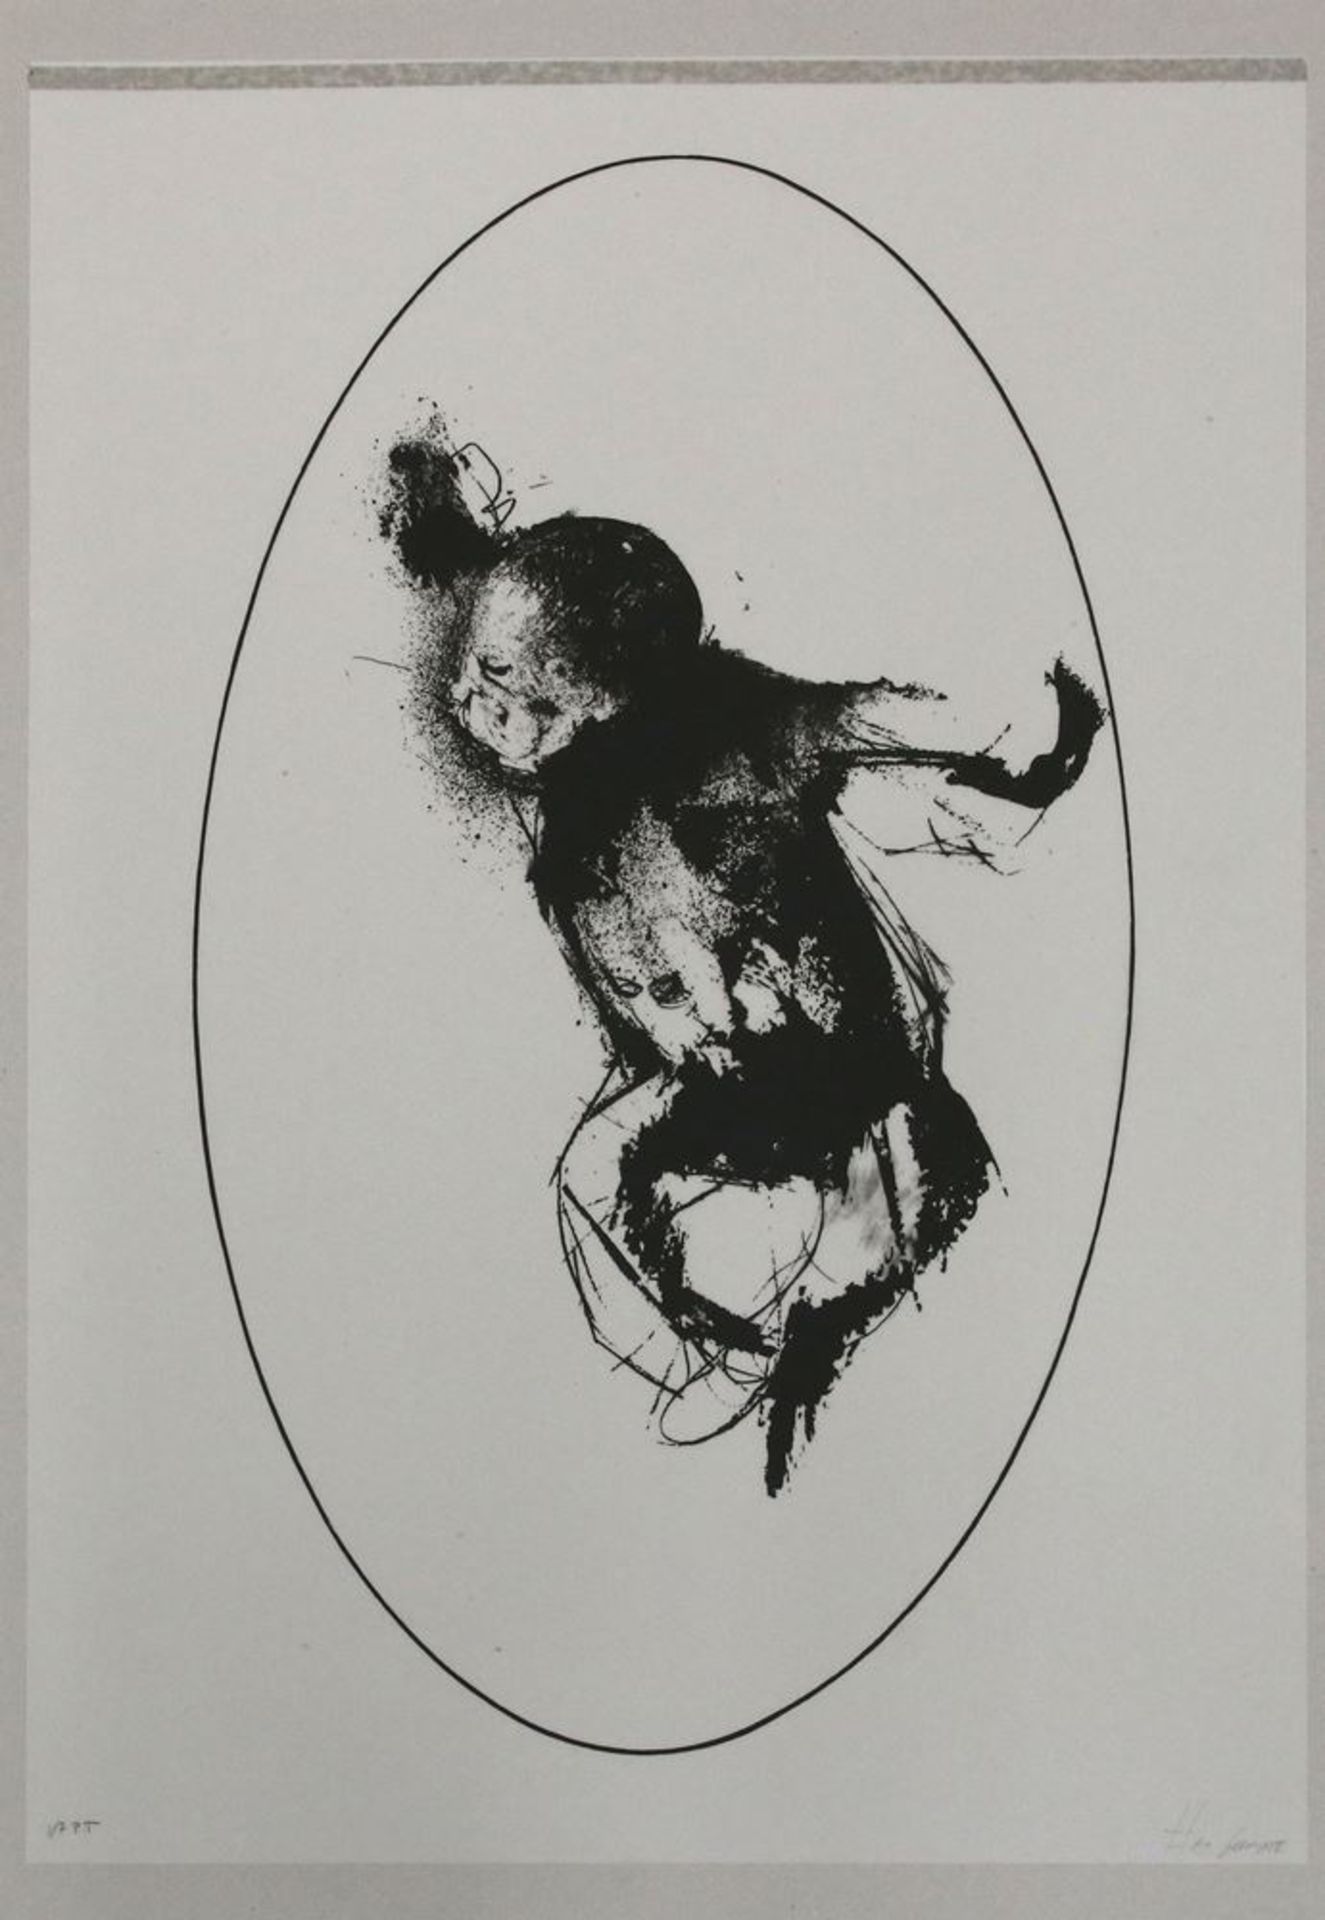 del Arco, Jon Ander* 1968 Madrid. Los Santos Inocentes IV. Serigraphie auf Polyester auf Papier. - Bild 2 aus 3